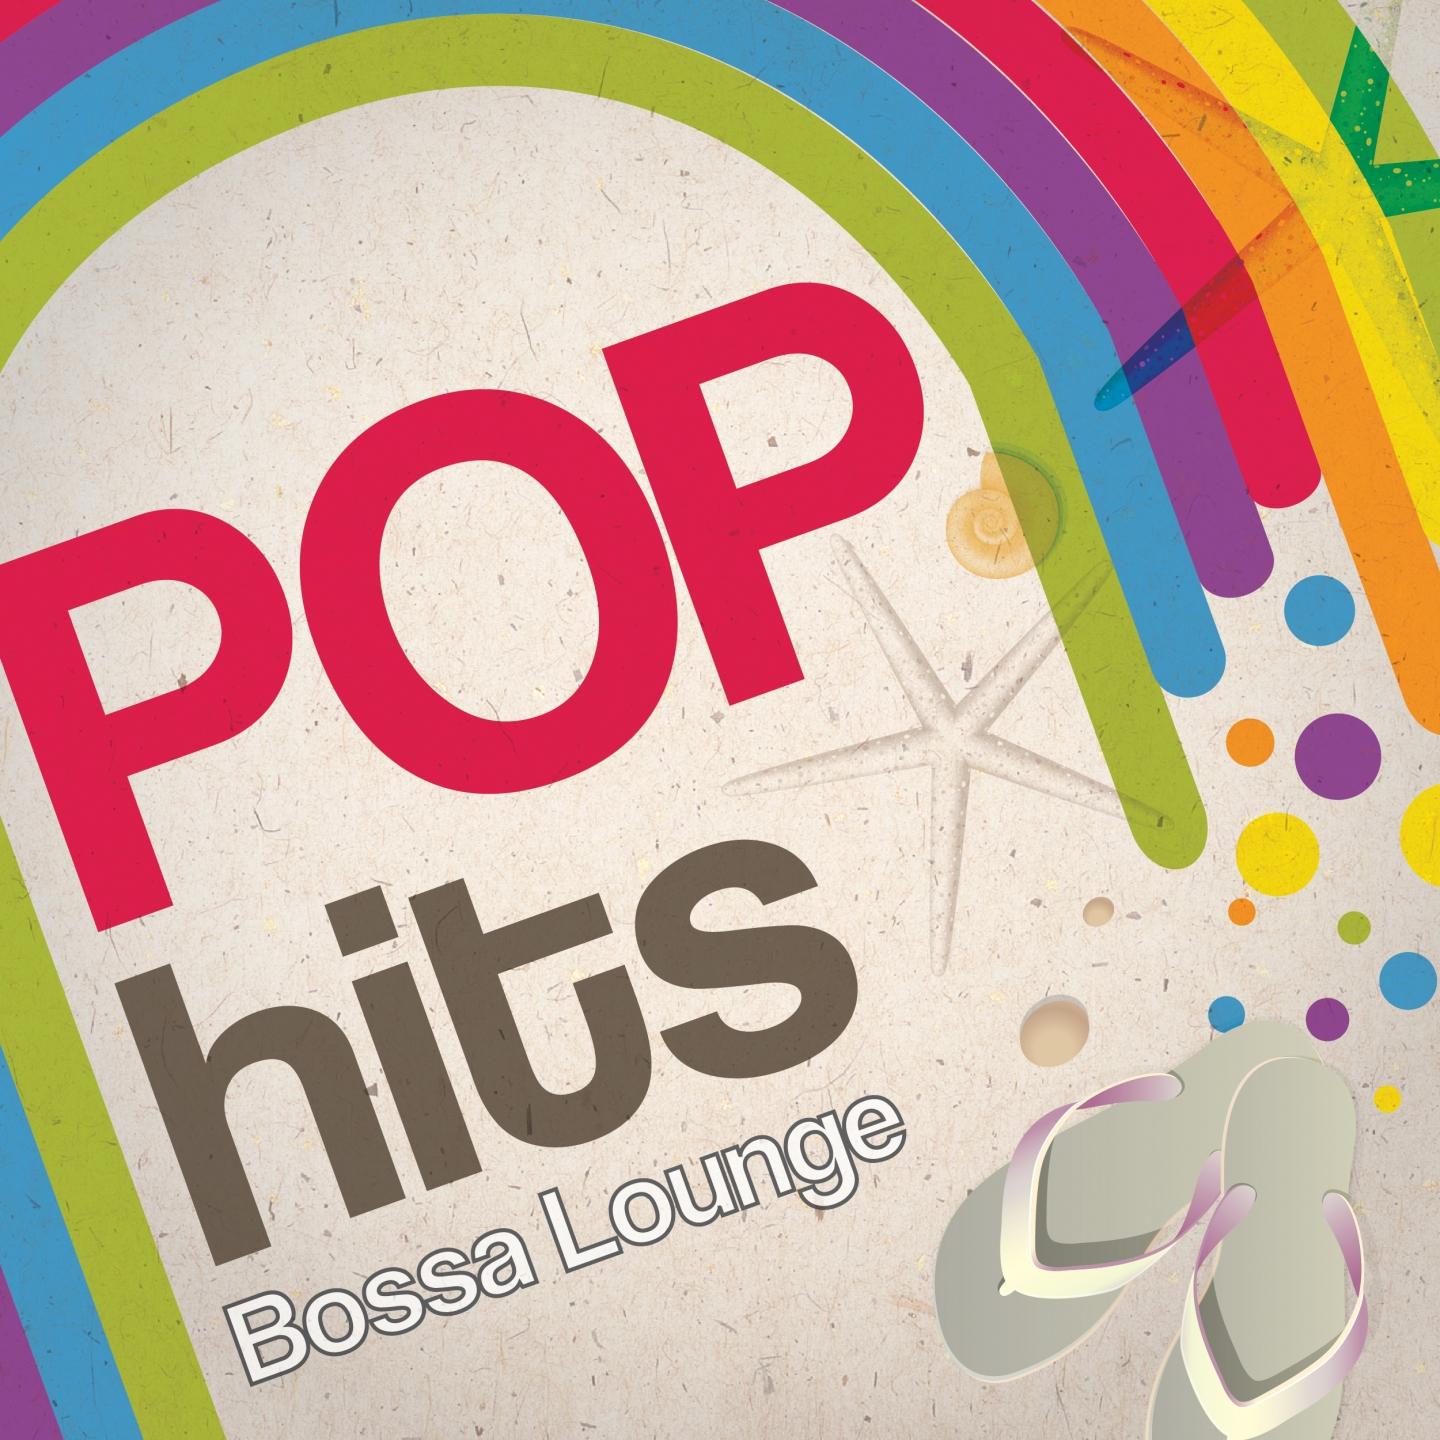 Pop Hits Bossa Lounge, Vol. 1